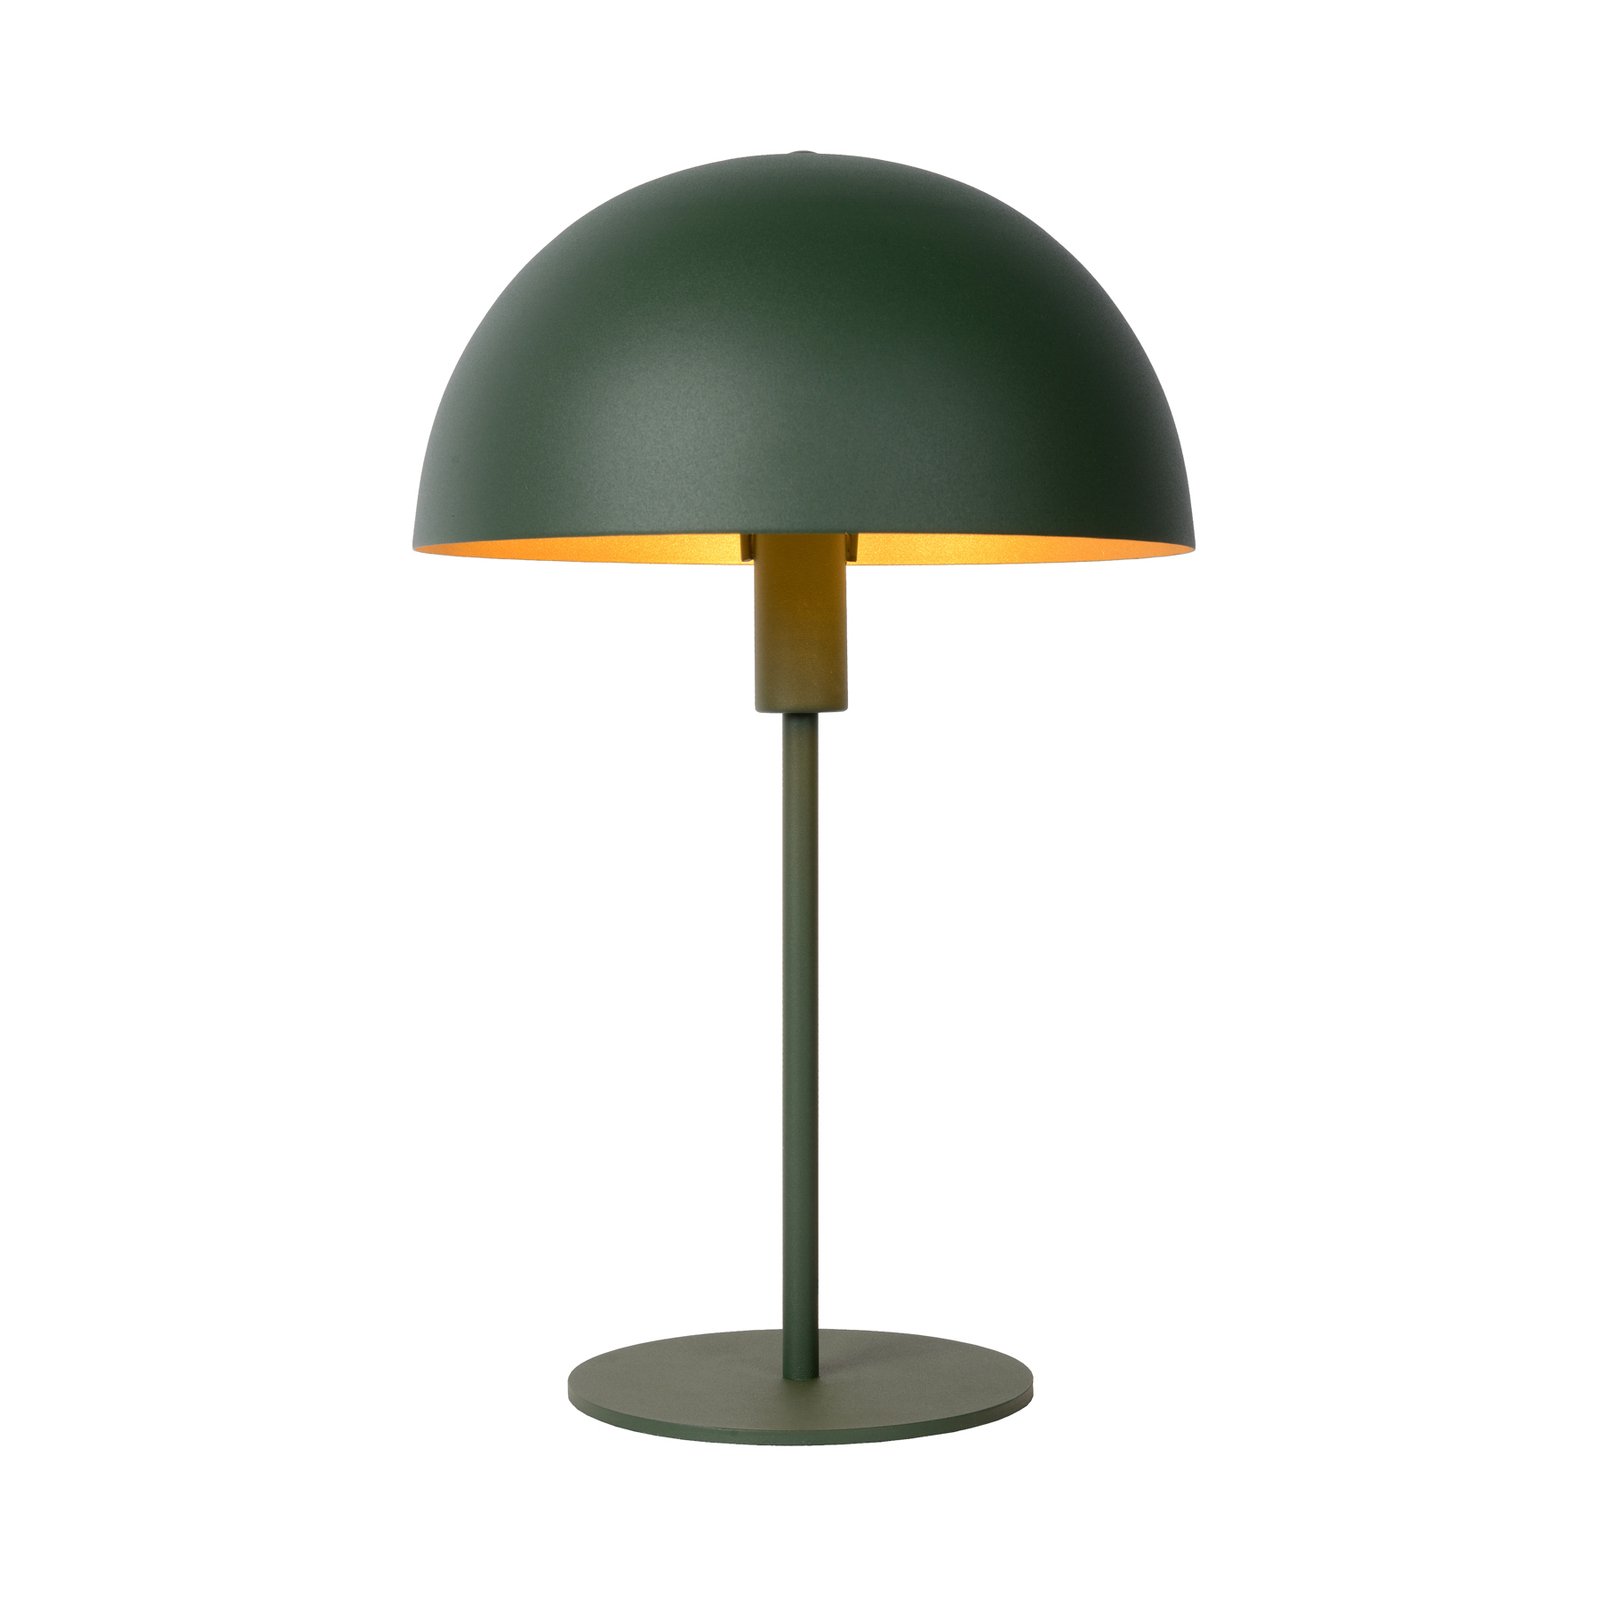 Siemon table lamp made of steel, Ø 25 cm, green